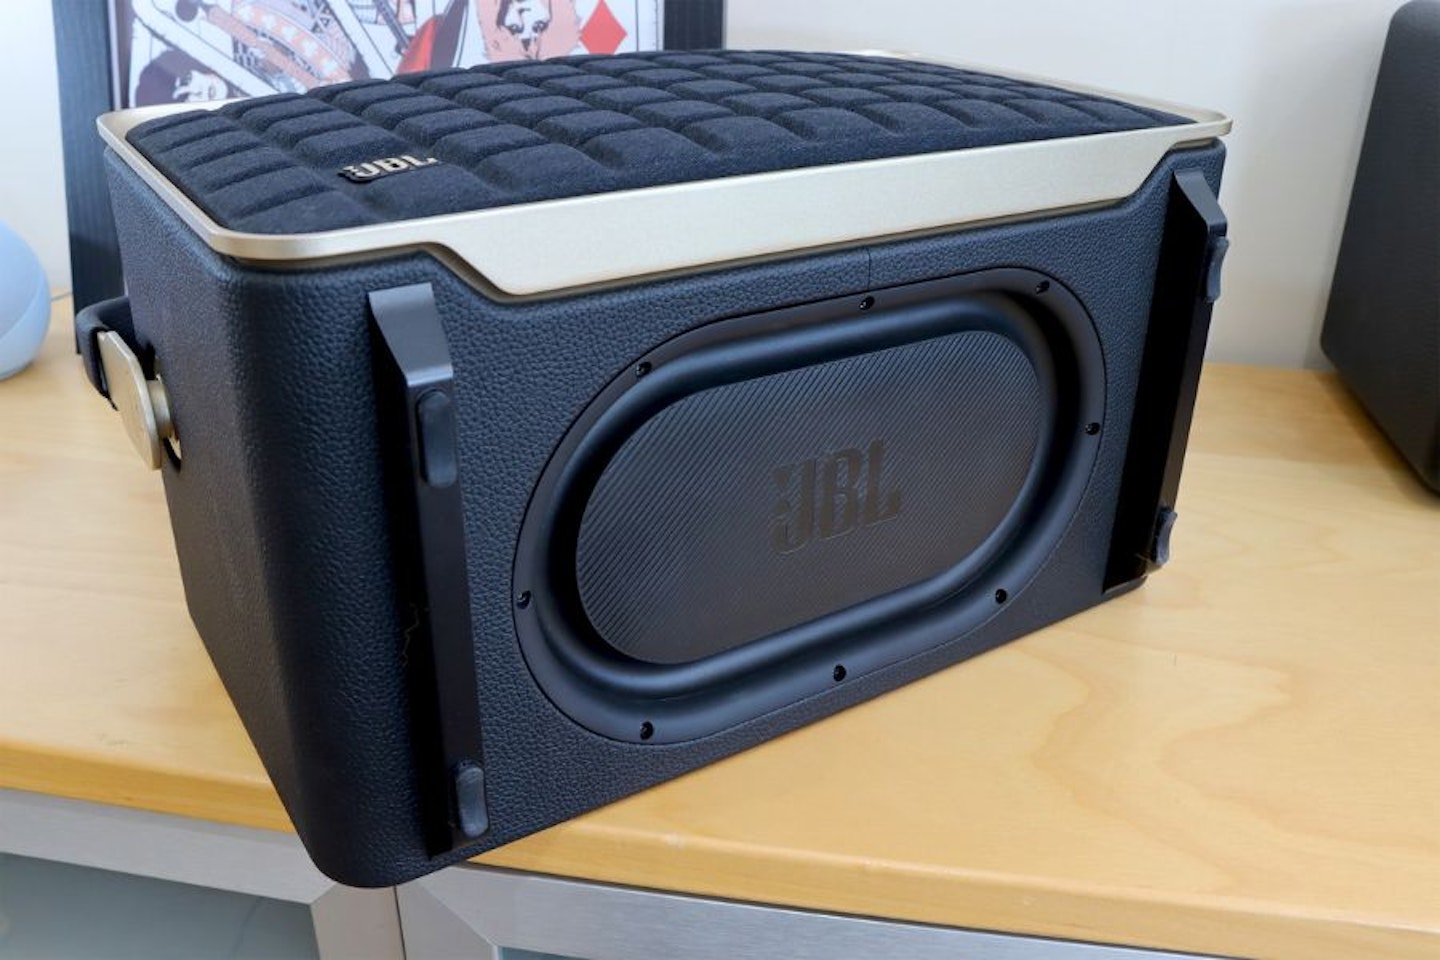 JBL Authentics 300 smart home speaker - underside